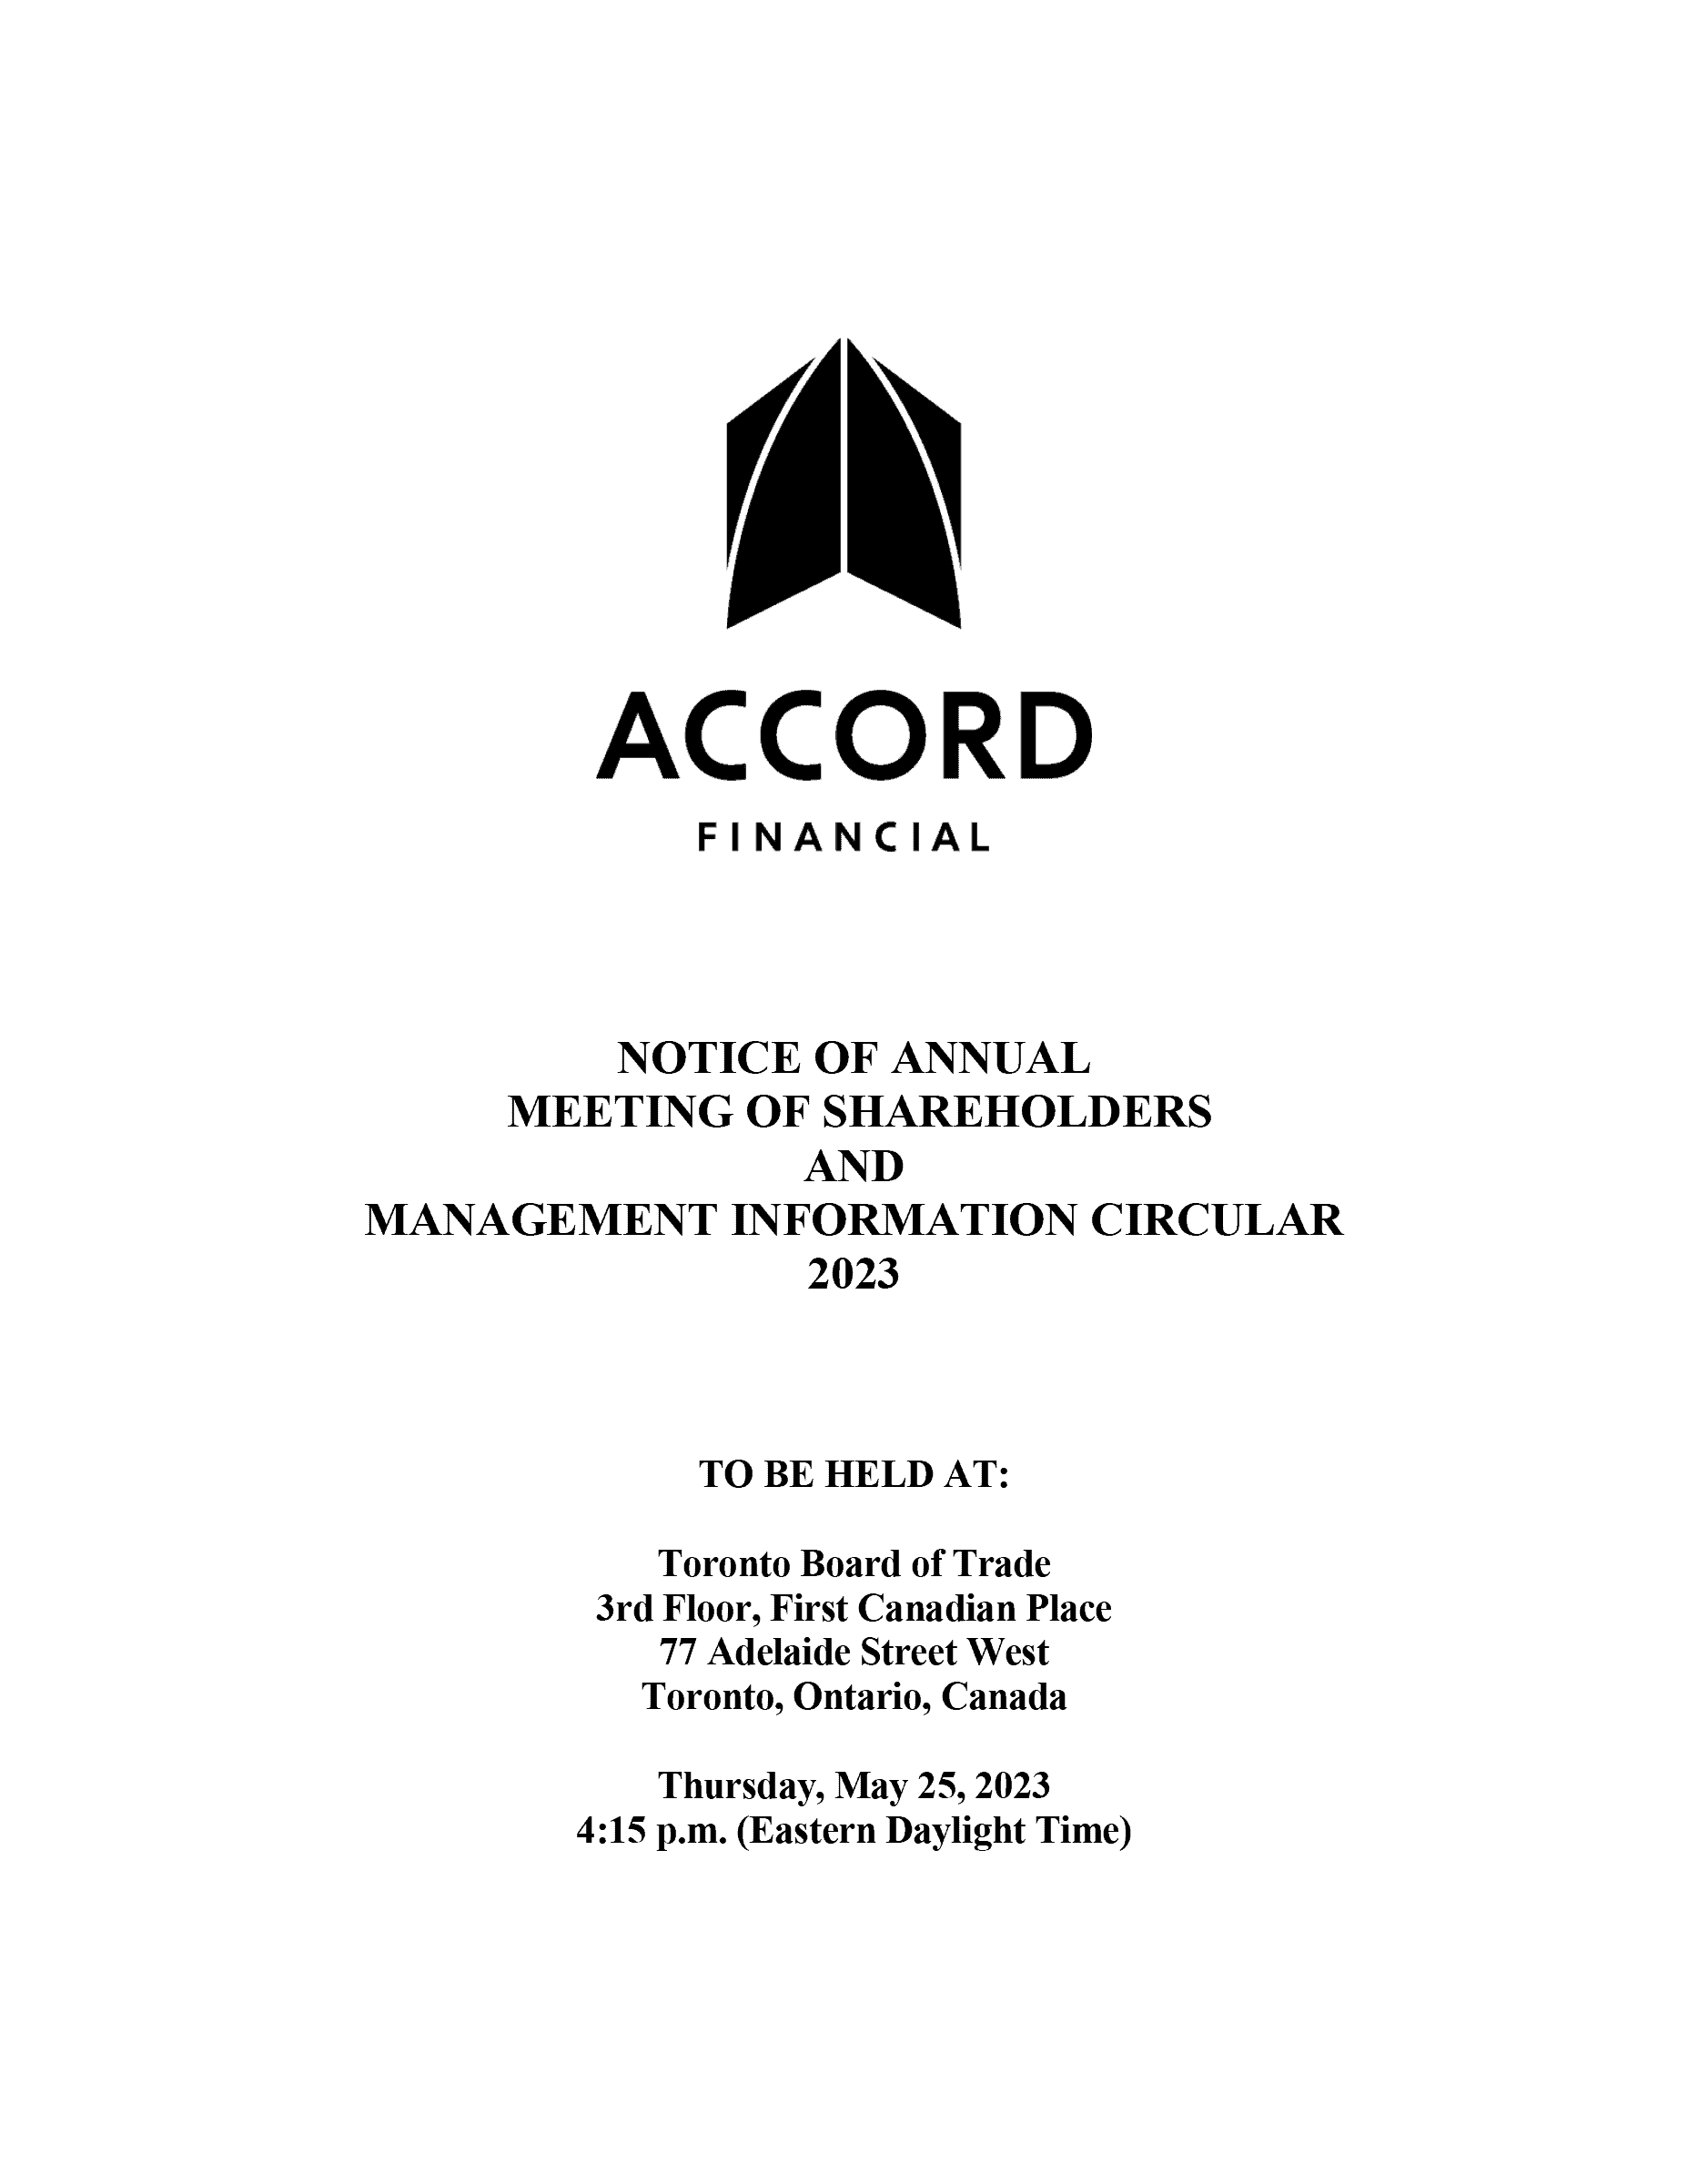 Accord management information circular 2023